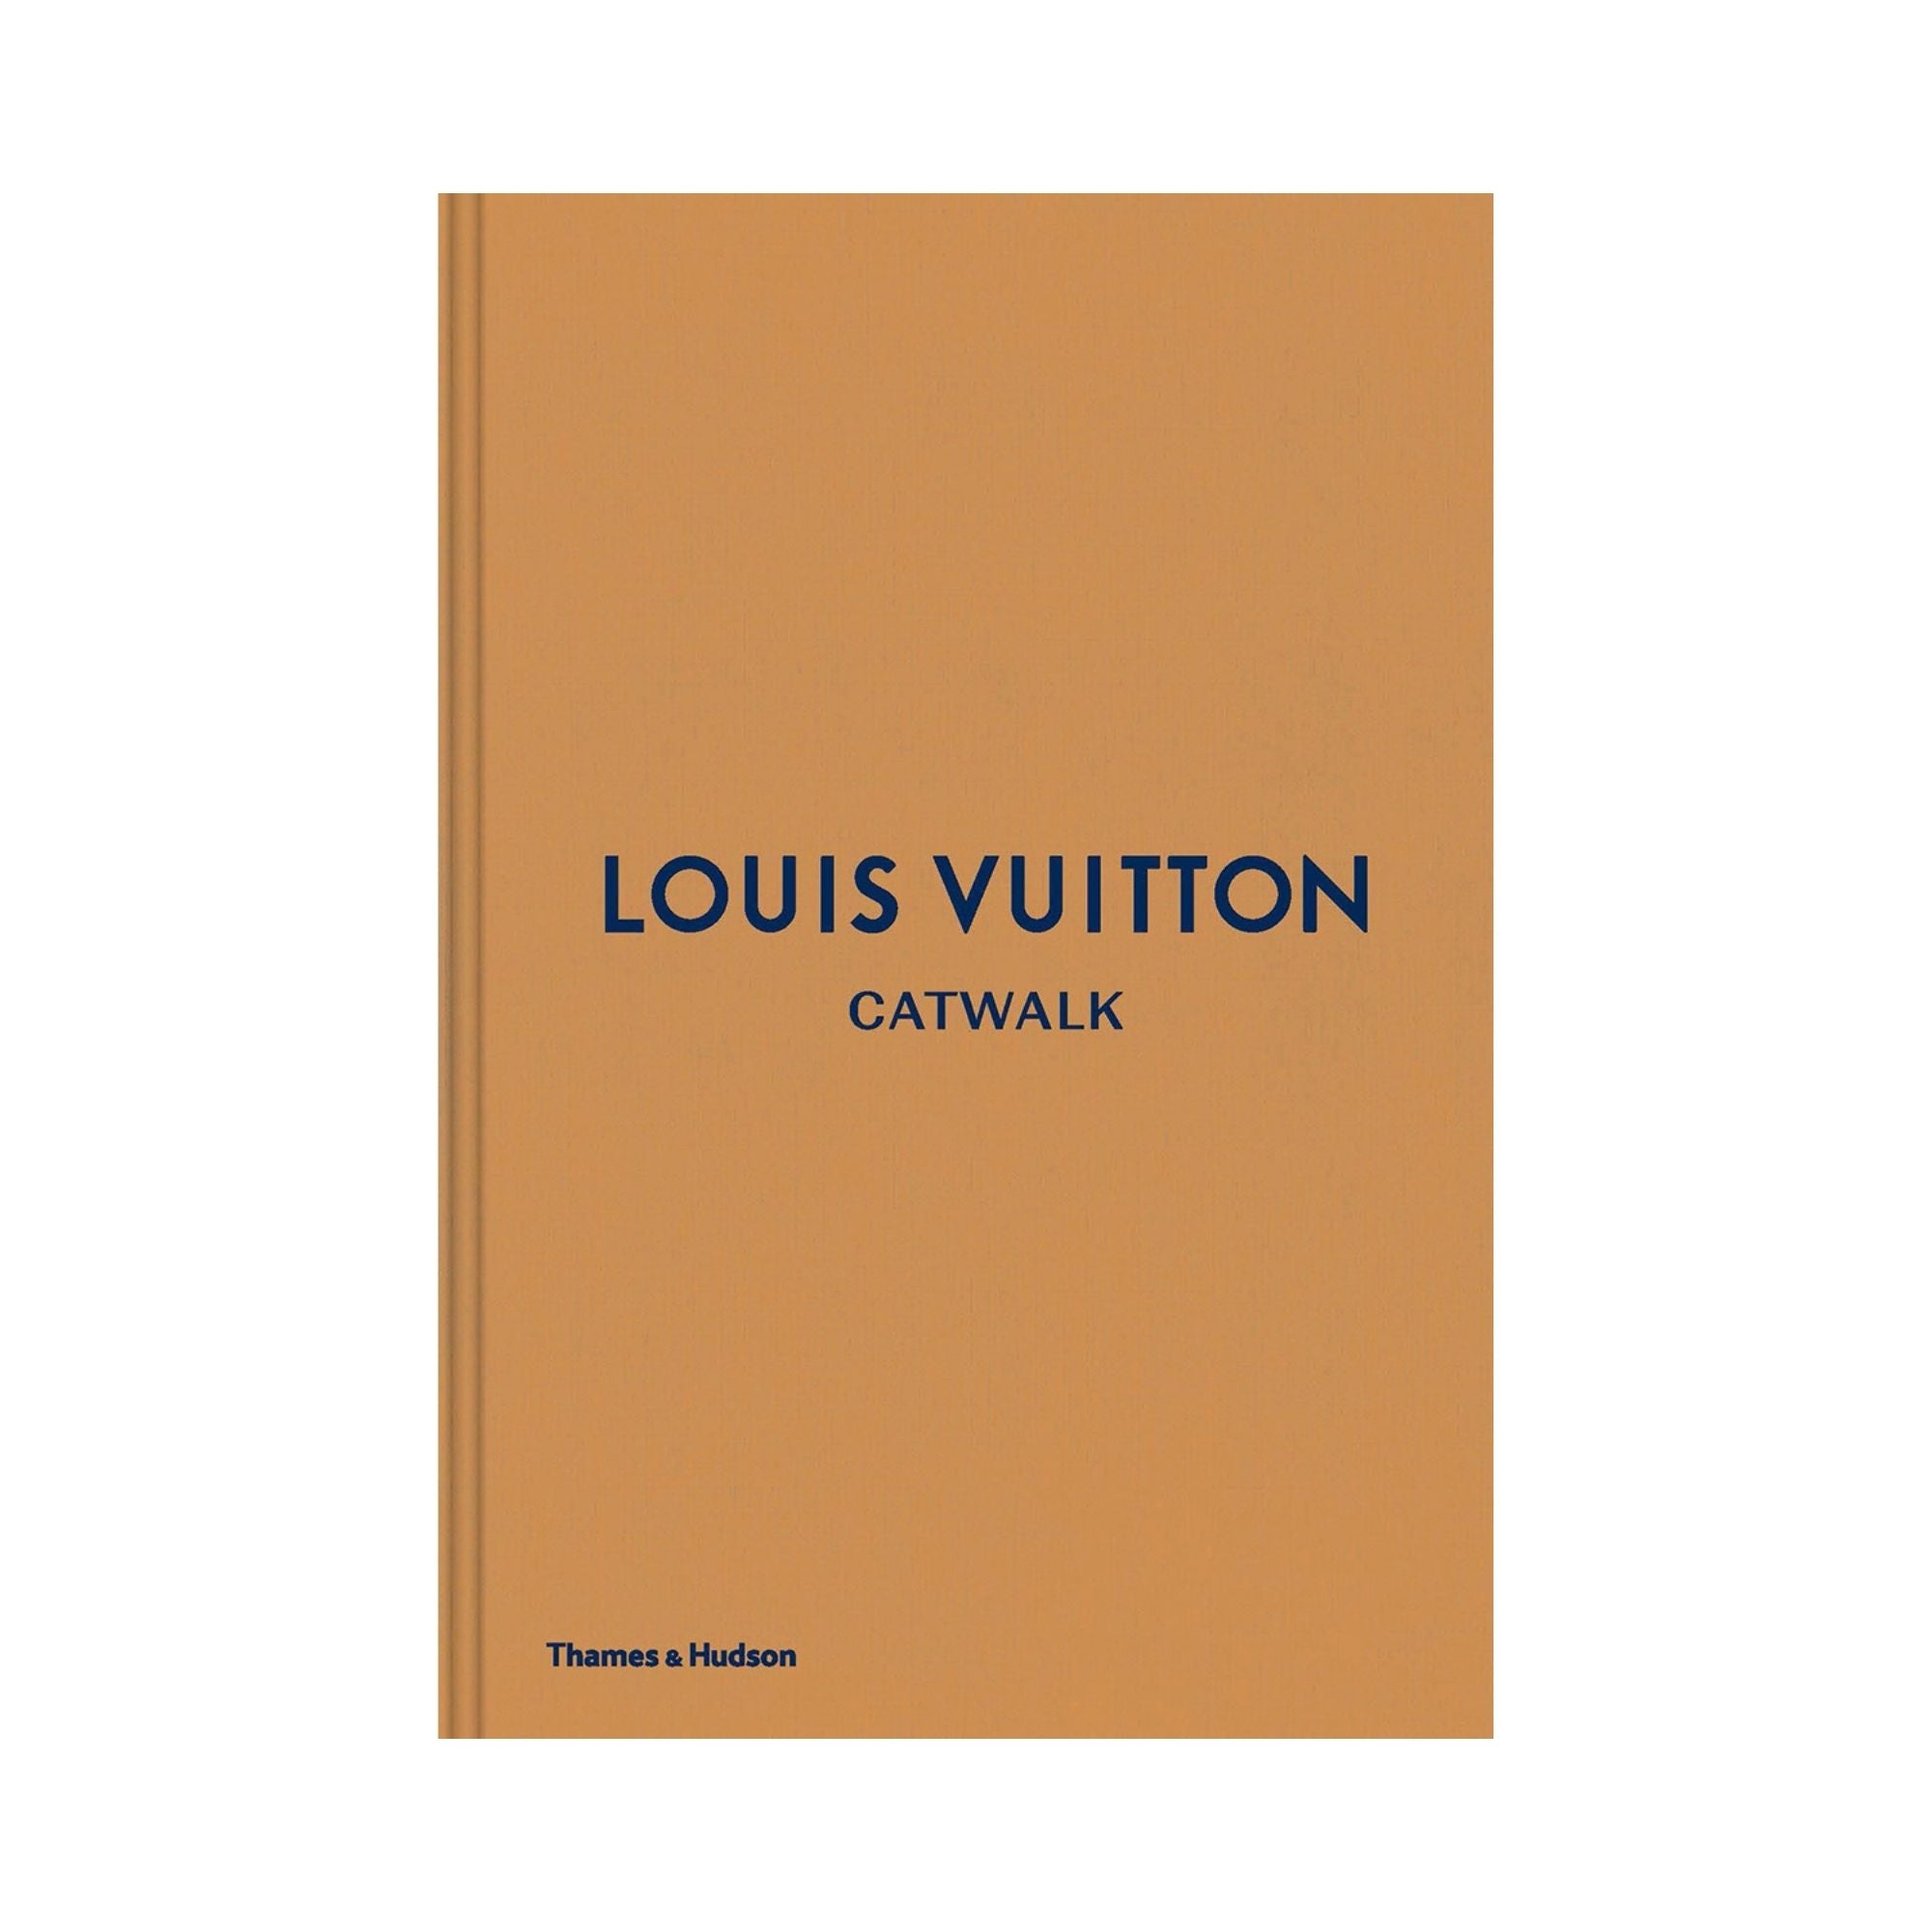 Louis Vuitton Catwalk - THAT COOL LIVING